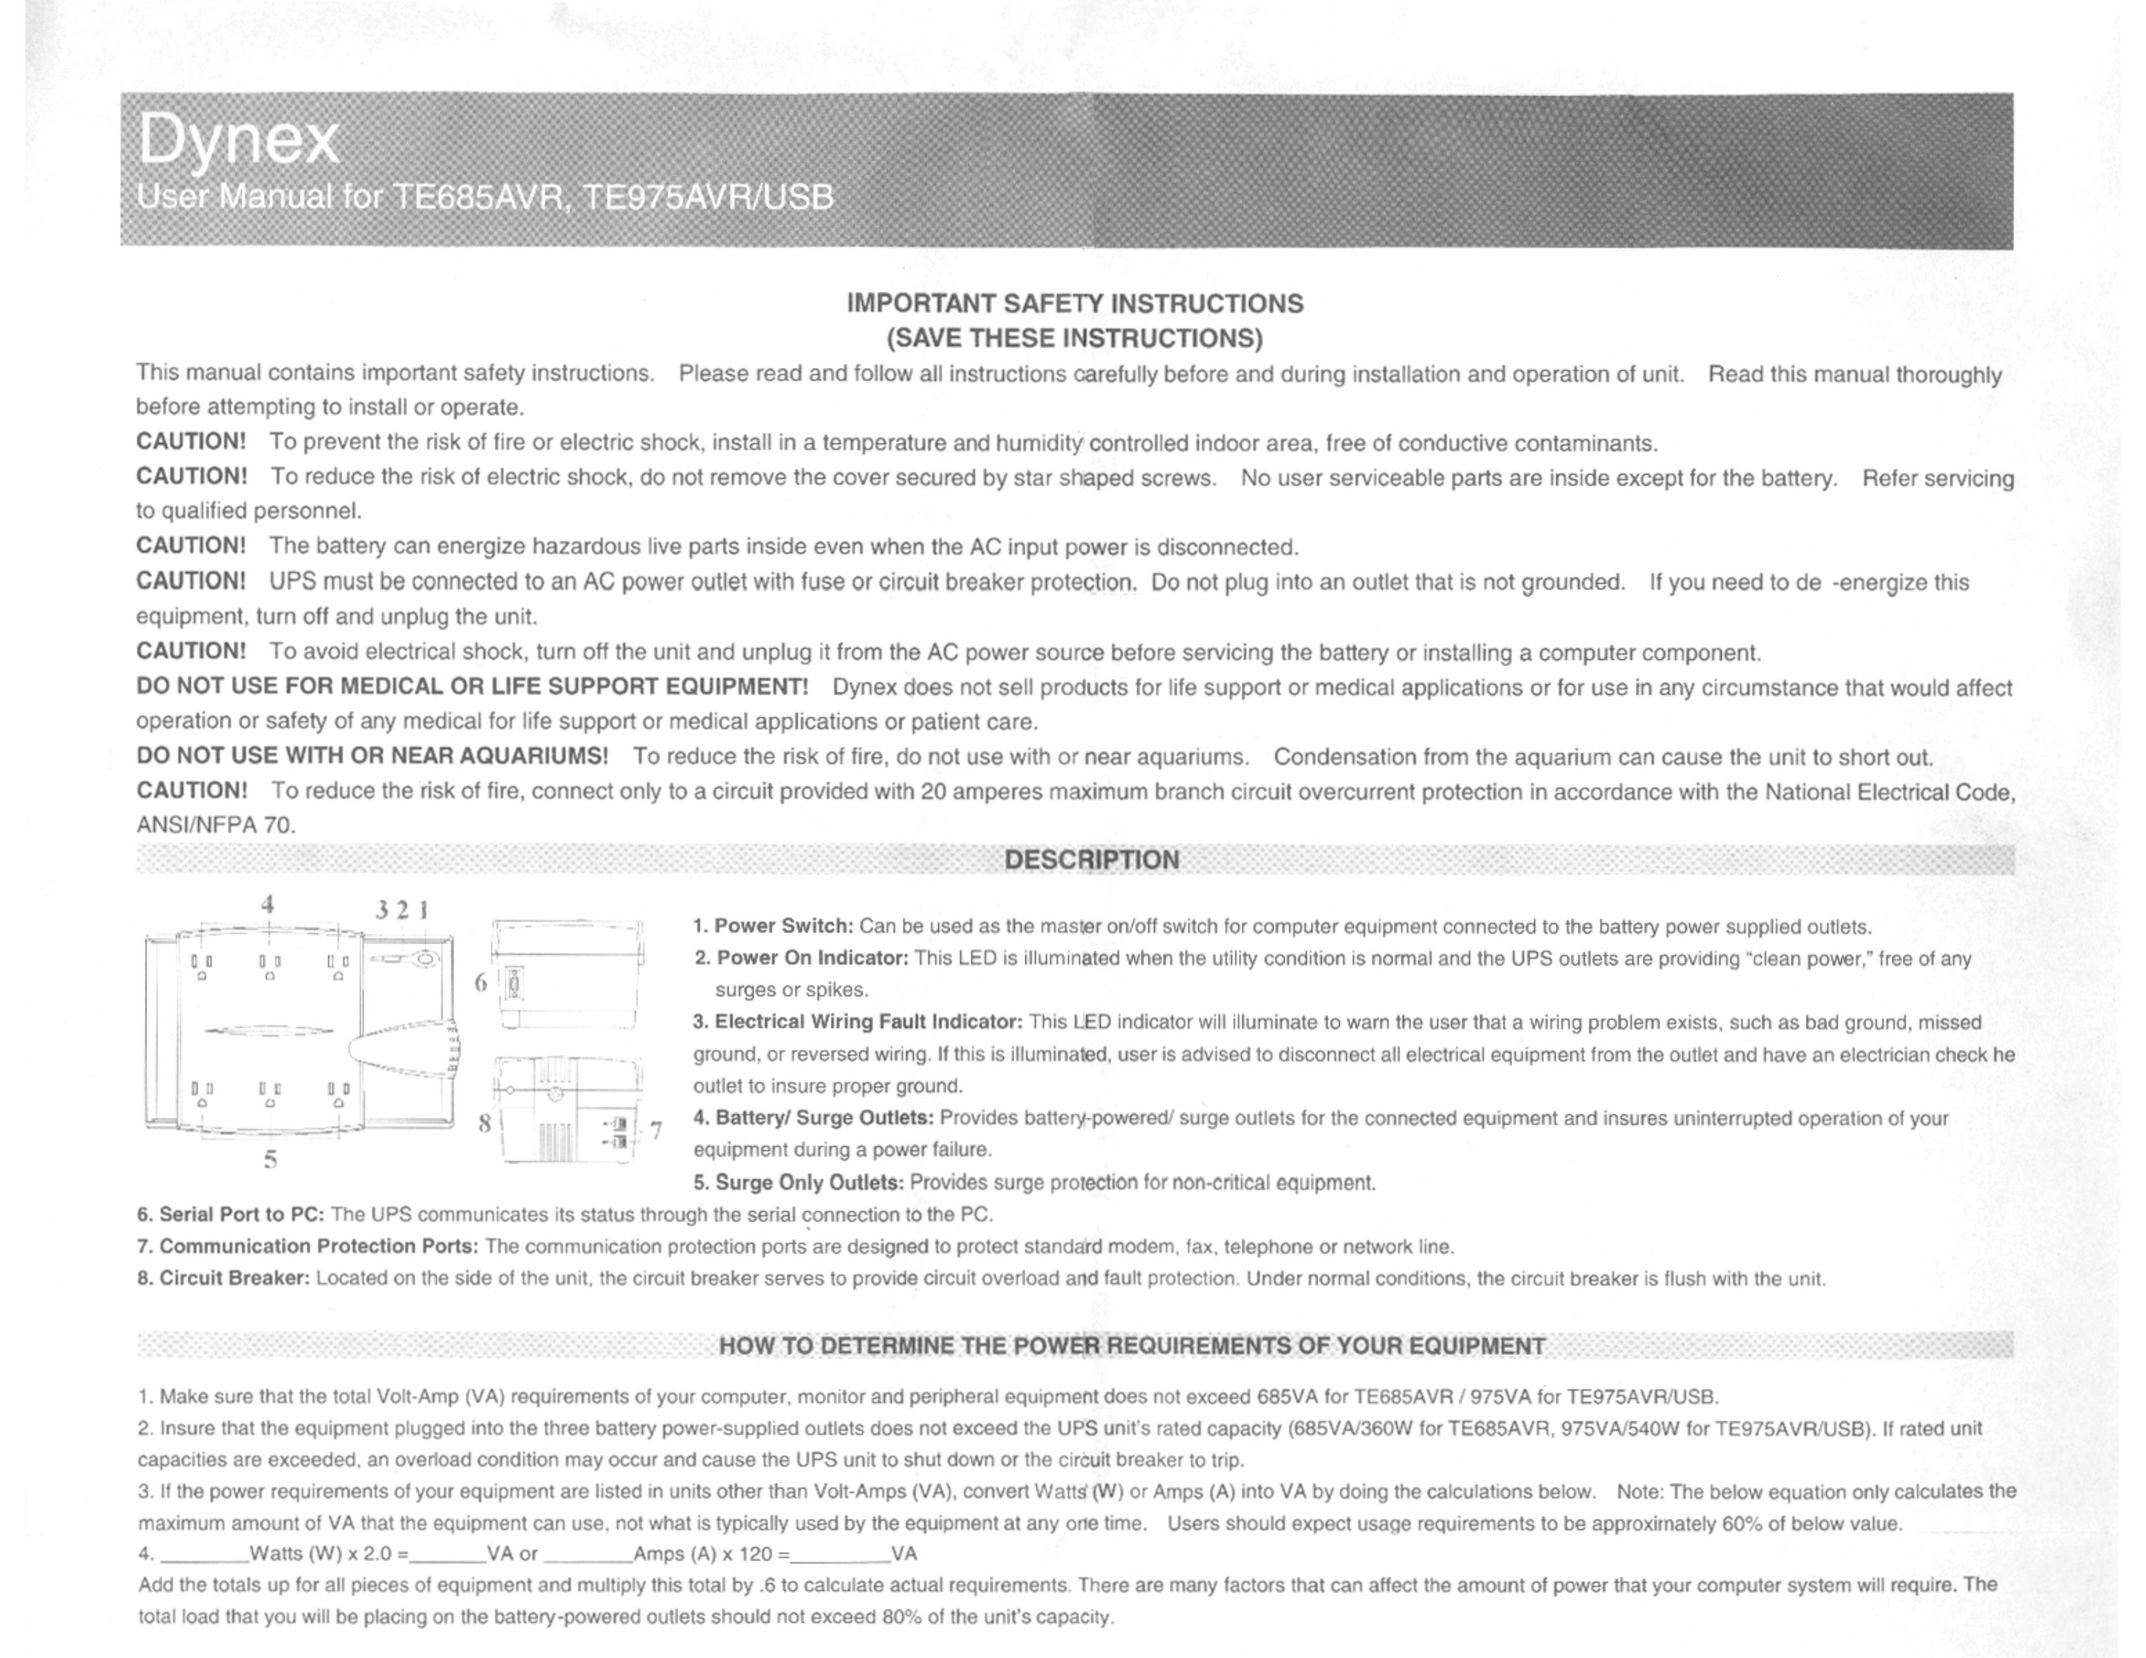 Dynex TE975AVR/USB Power Supply User Manual (Page 1)